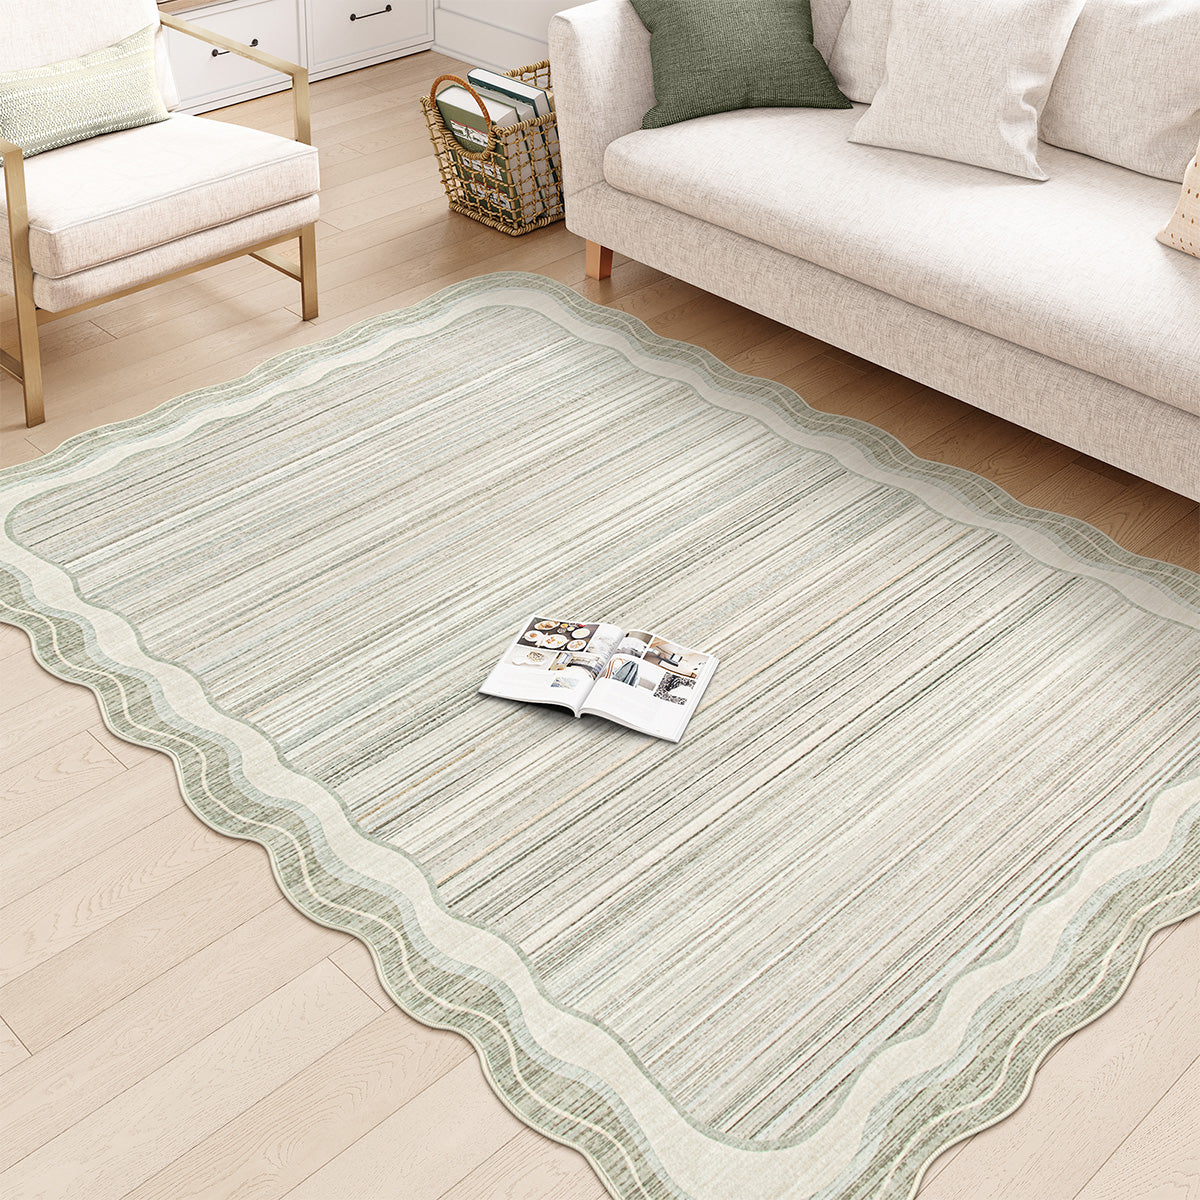 irregular shaped rugs